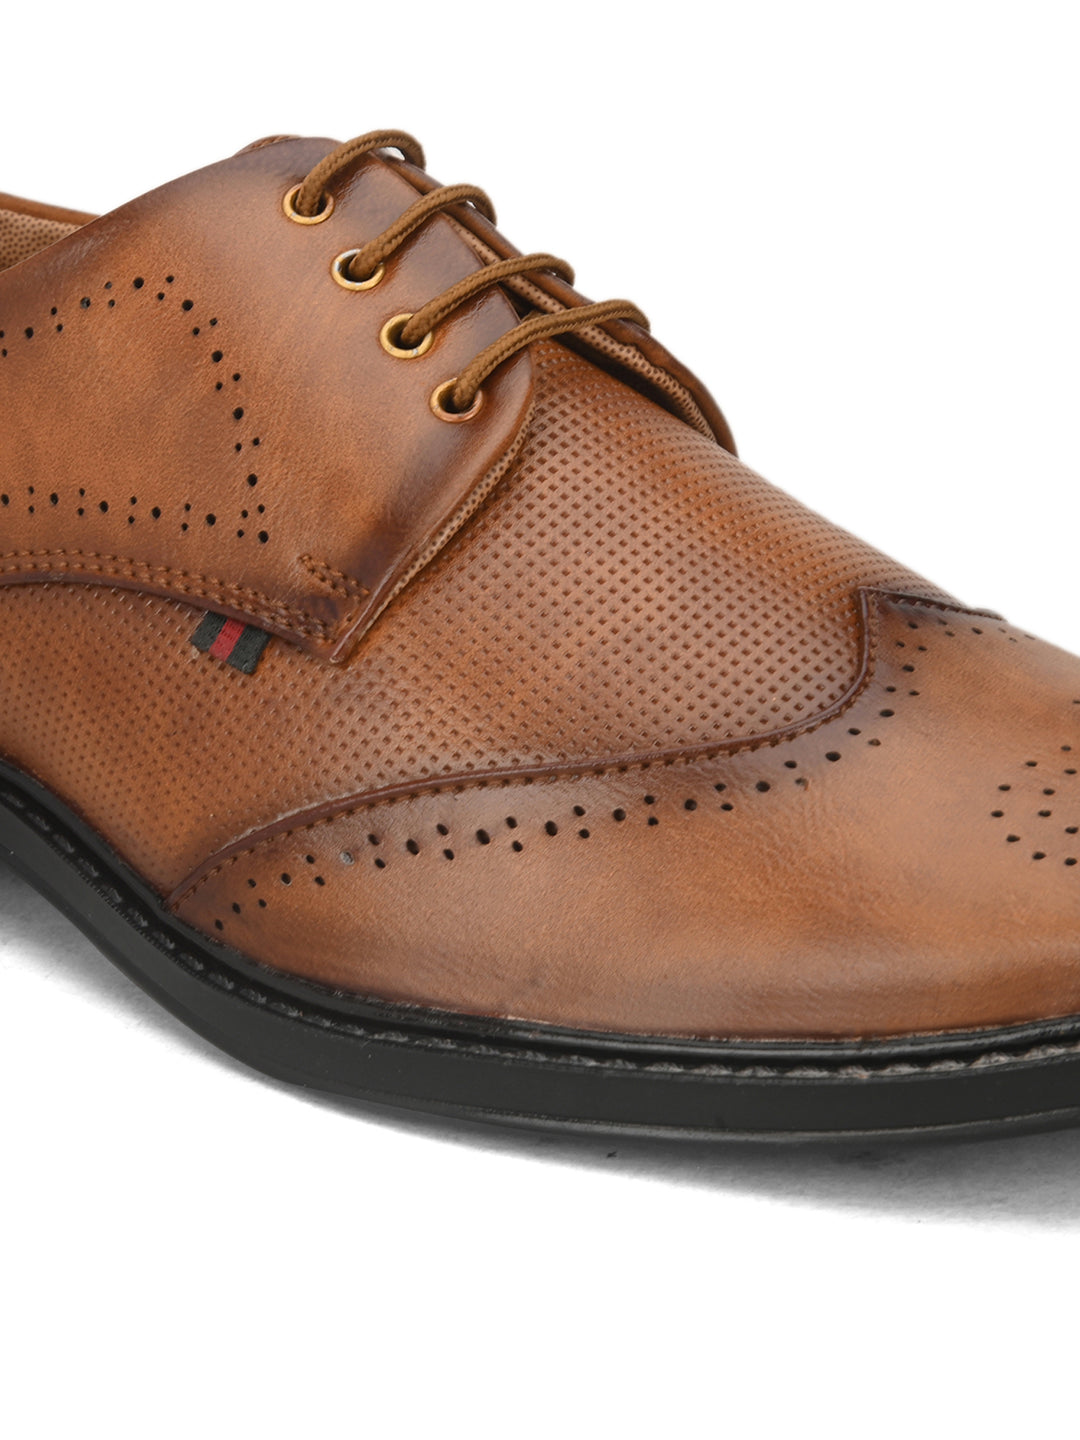 Men's Formal Brogue Shoes.